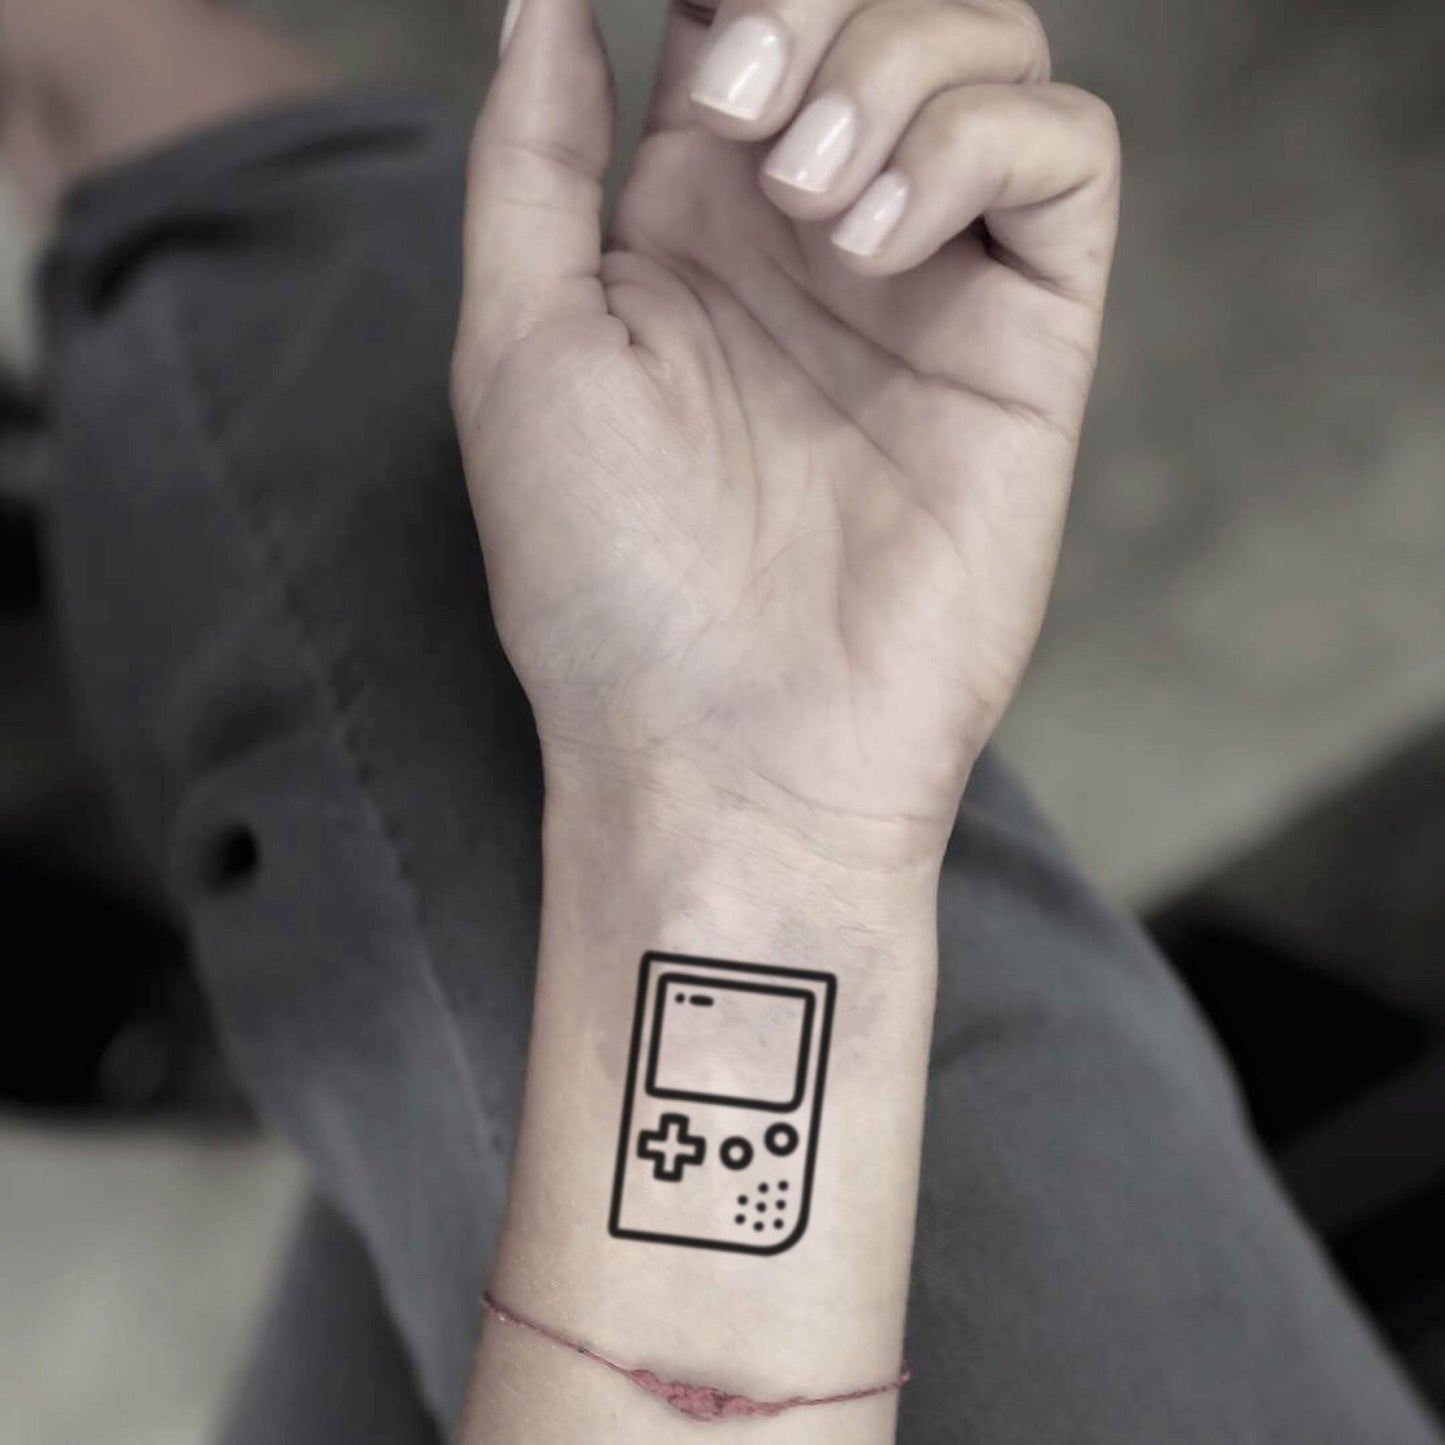 fake small gameboy pocket gamer console minimalist temporary tattoo sticker design idea on wrist